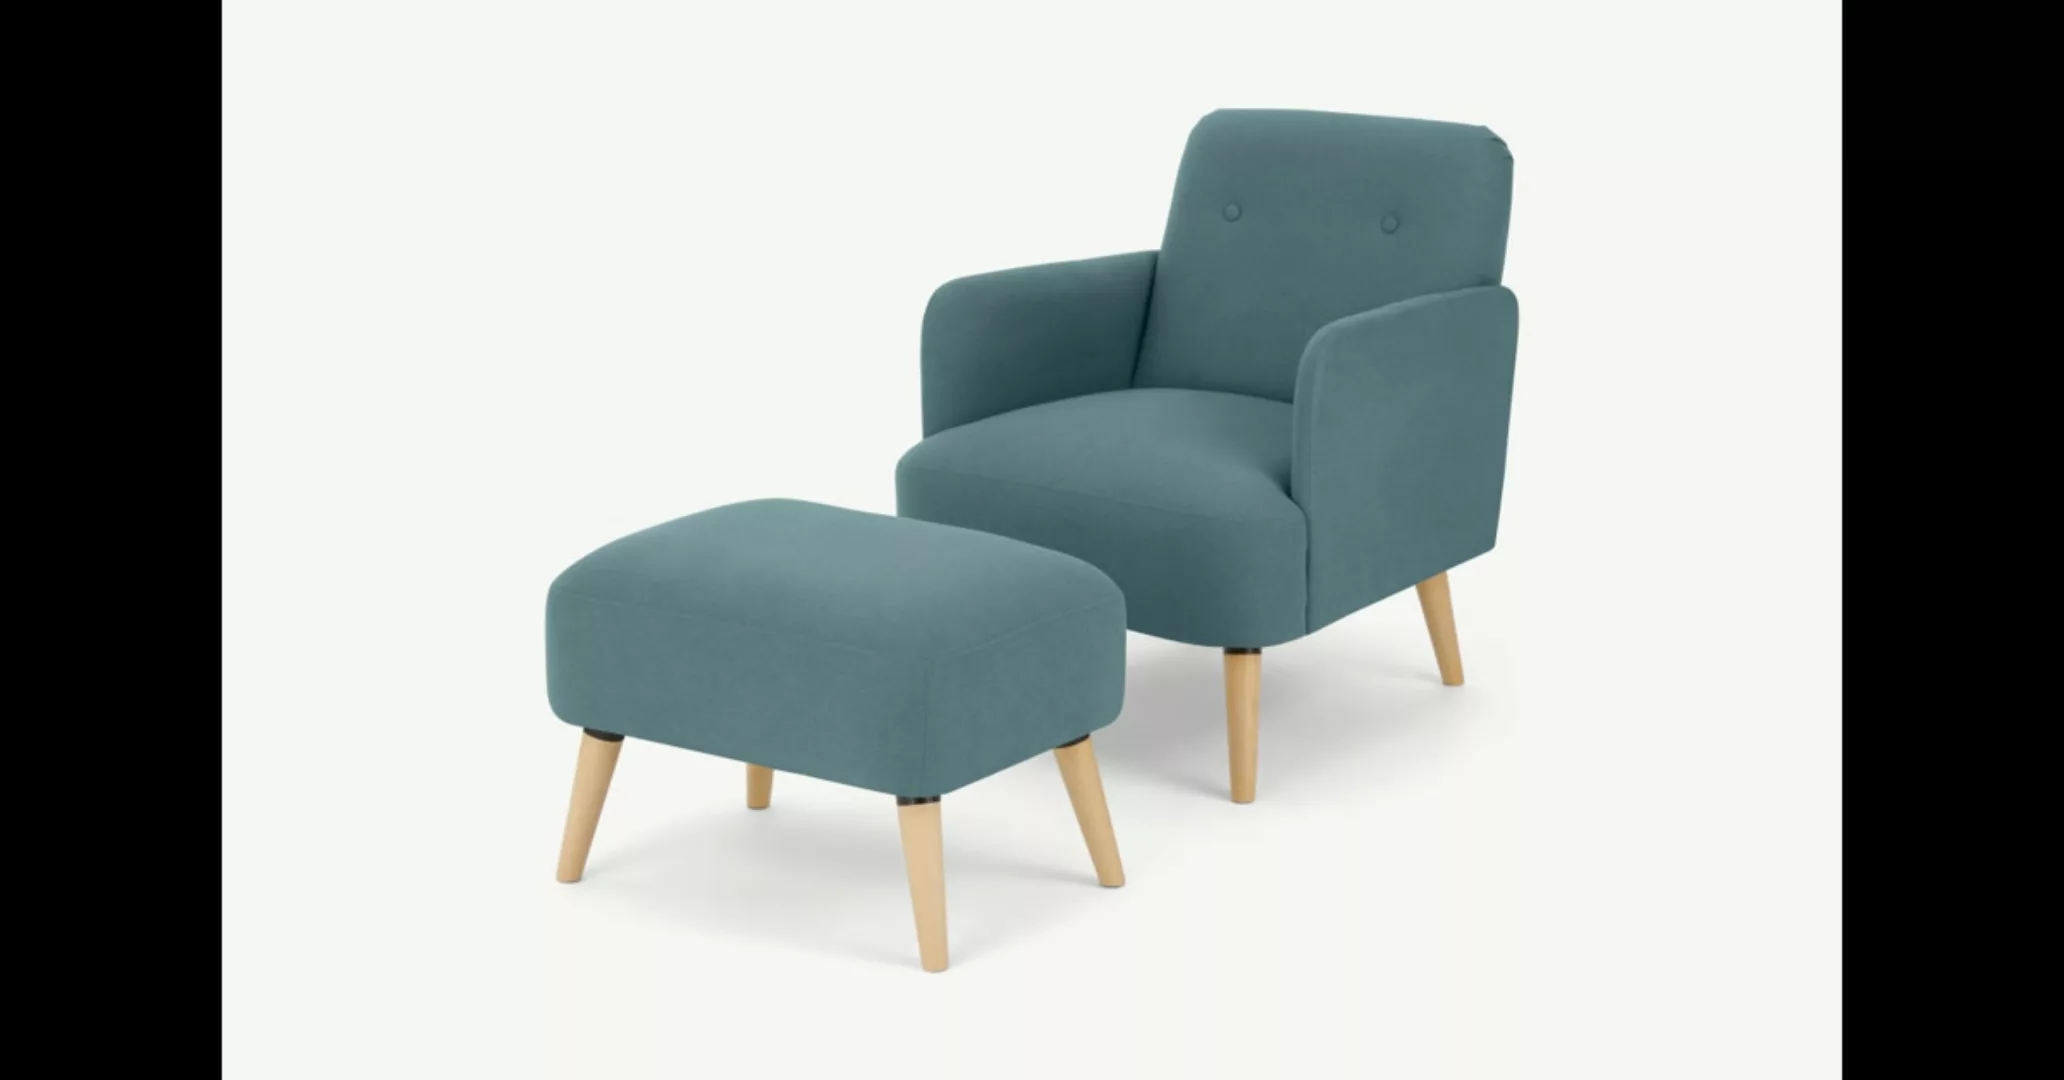 Elvi Sessel mit Hocker, Sorbetblau - MADE.com günstig online kaufen